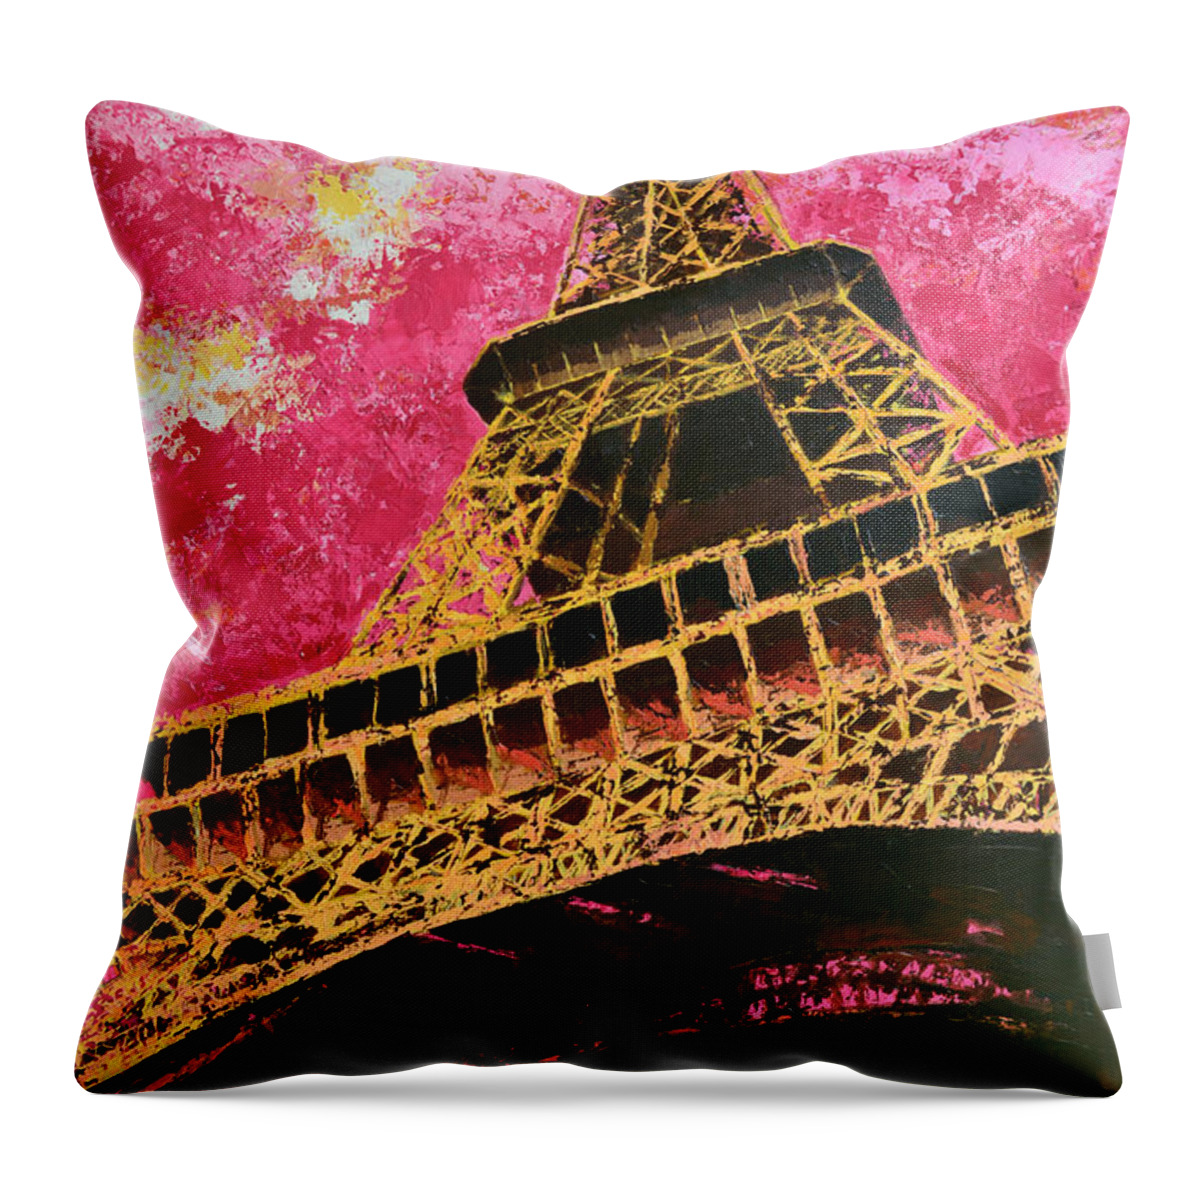 Eiffel Tower Acrylic Painting Throw Pillow featuring the painting Eiffel Tower Iconic Structure by Patricia Awapara